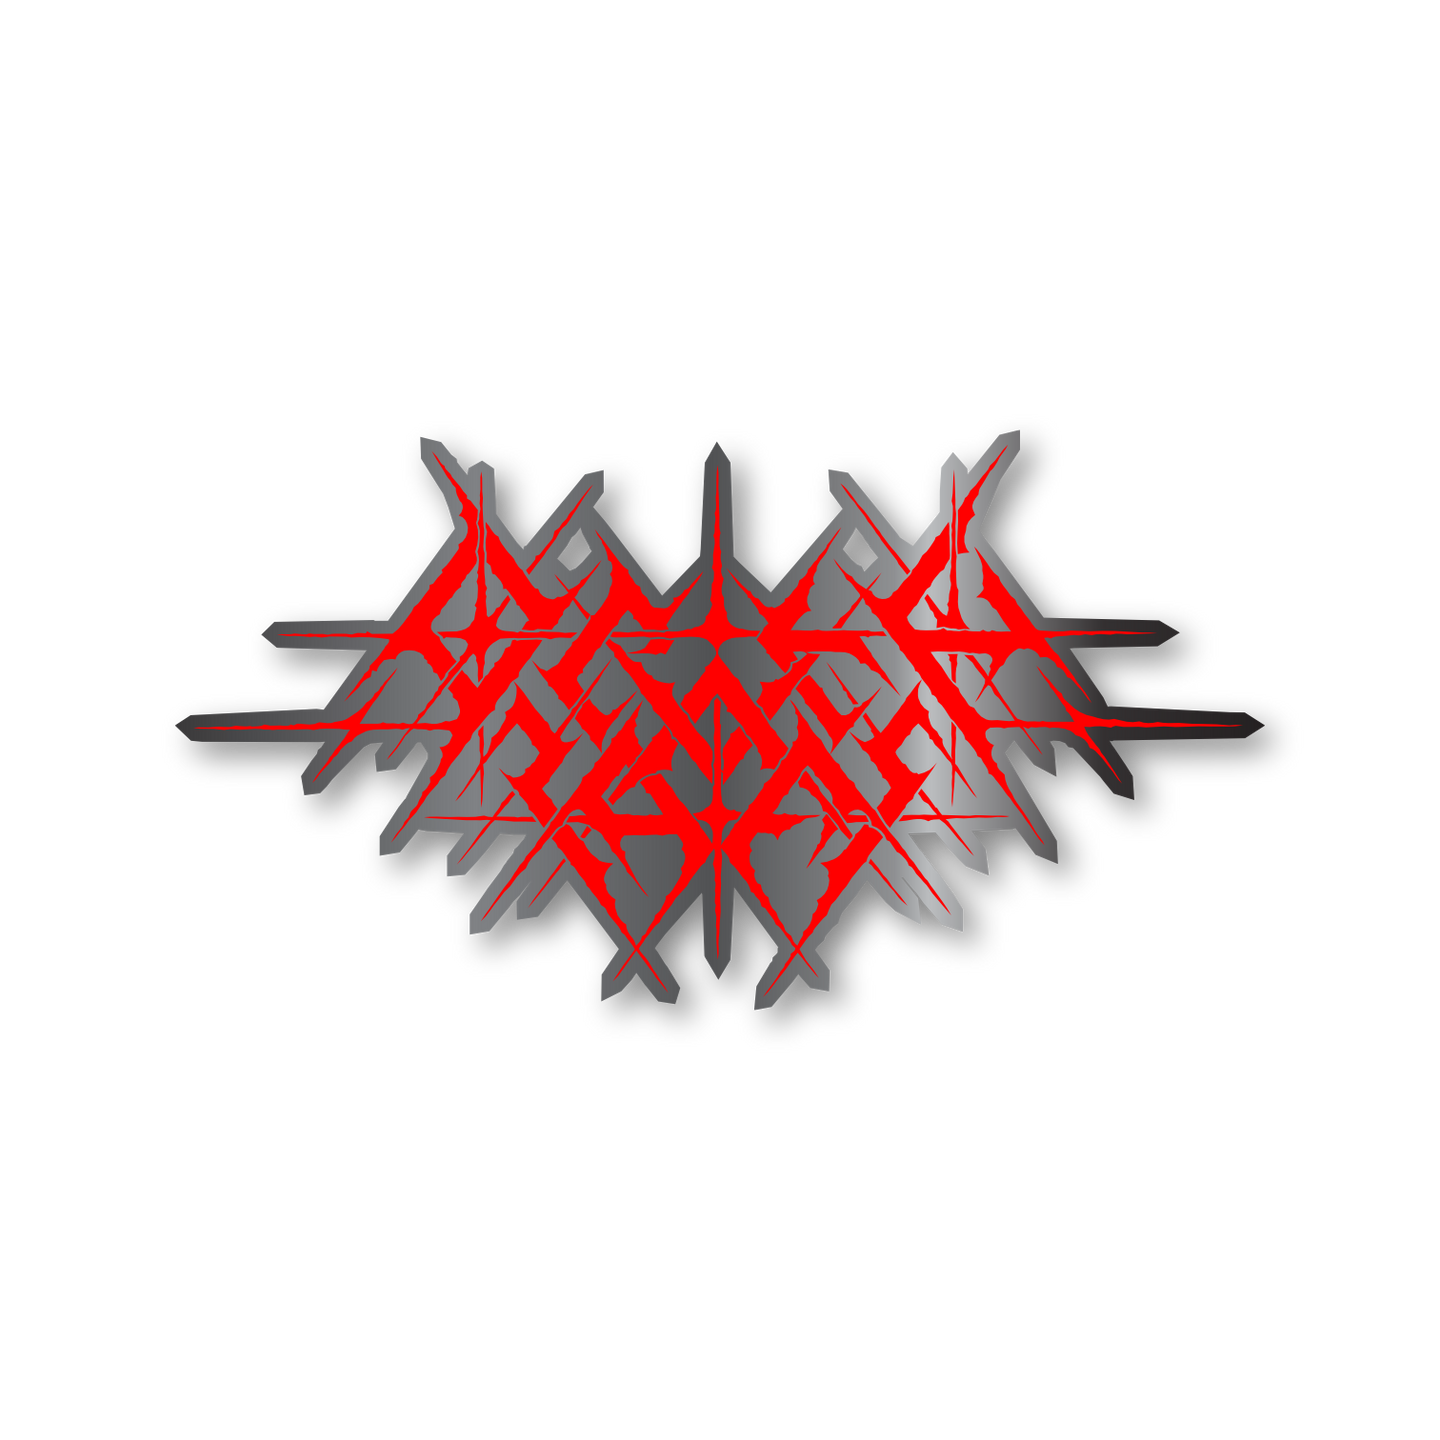 DS Death Metal Logo Pin